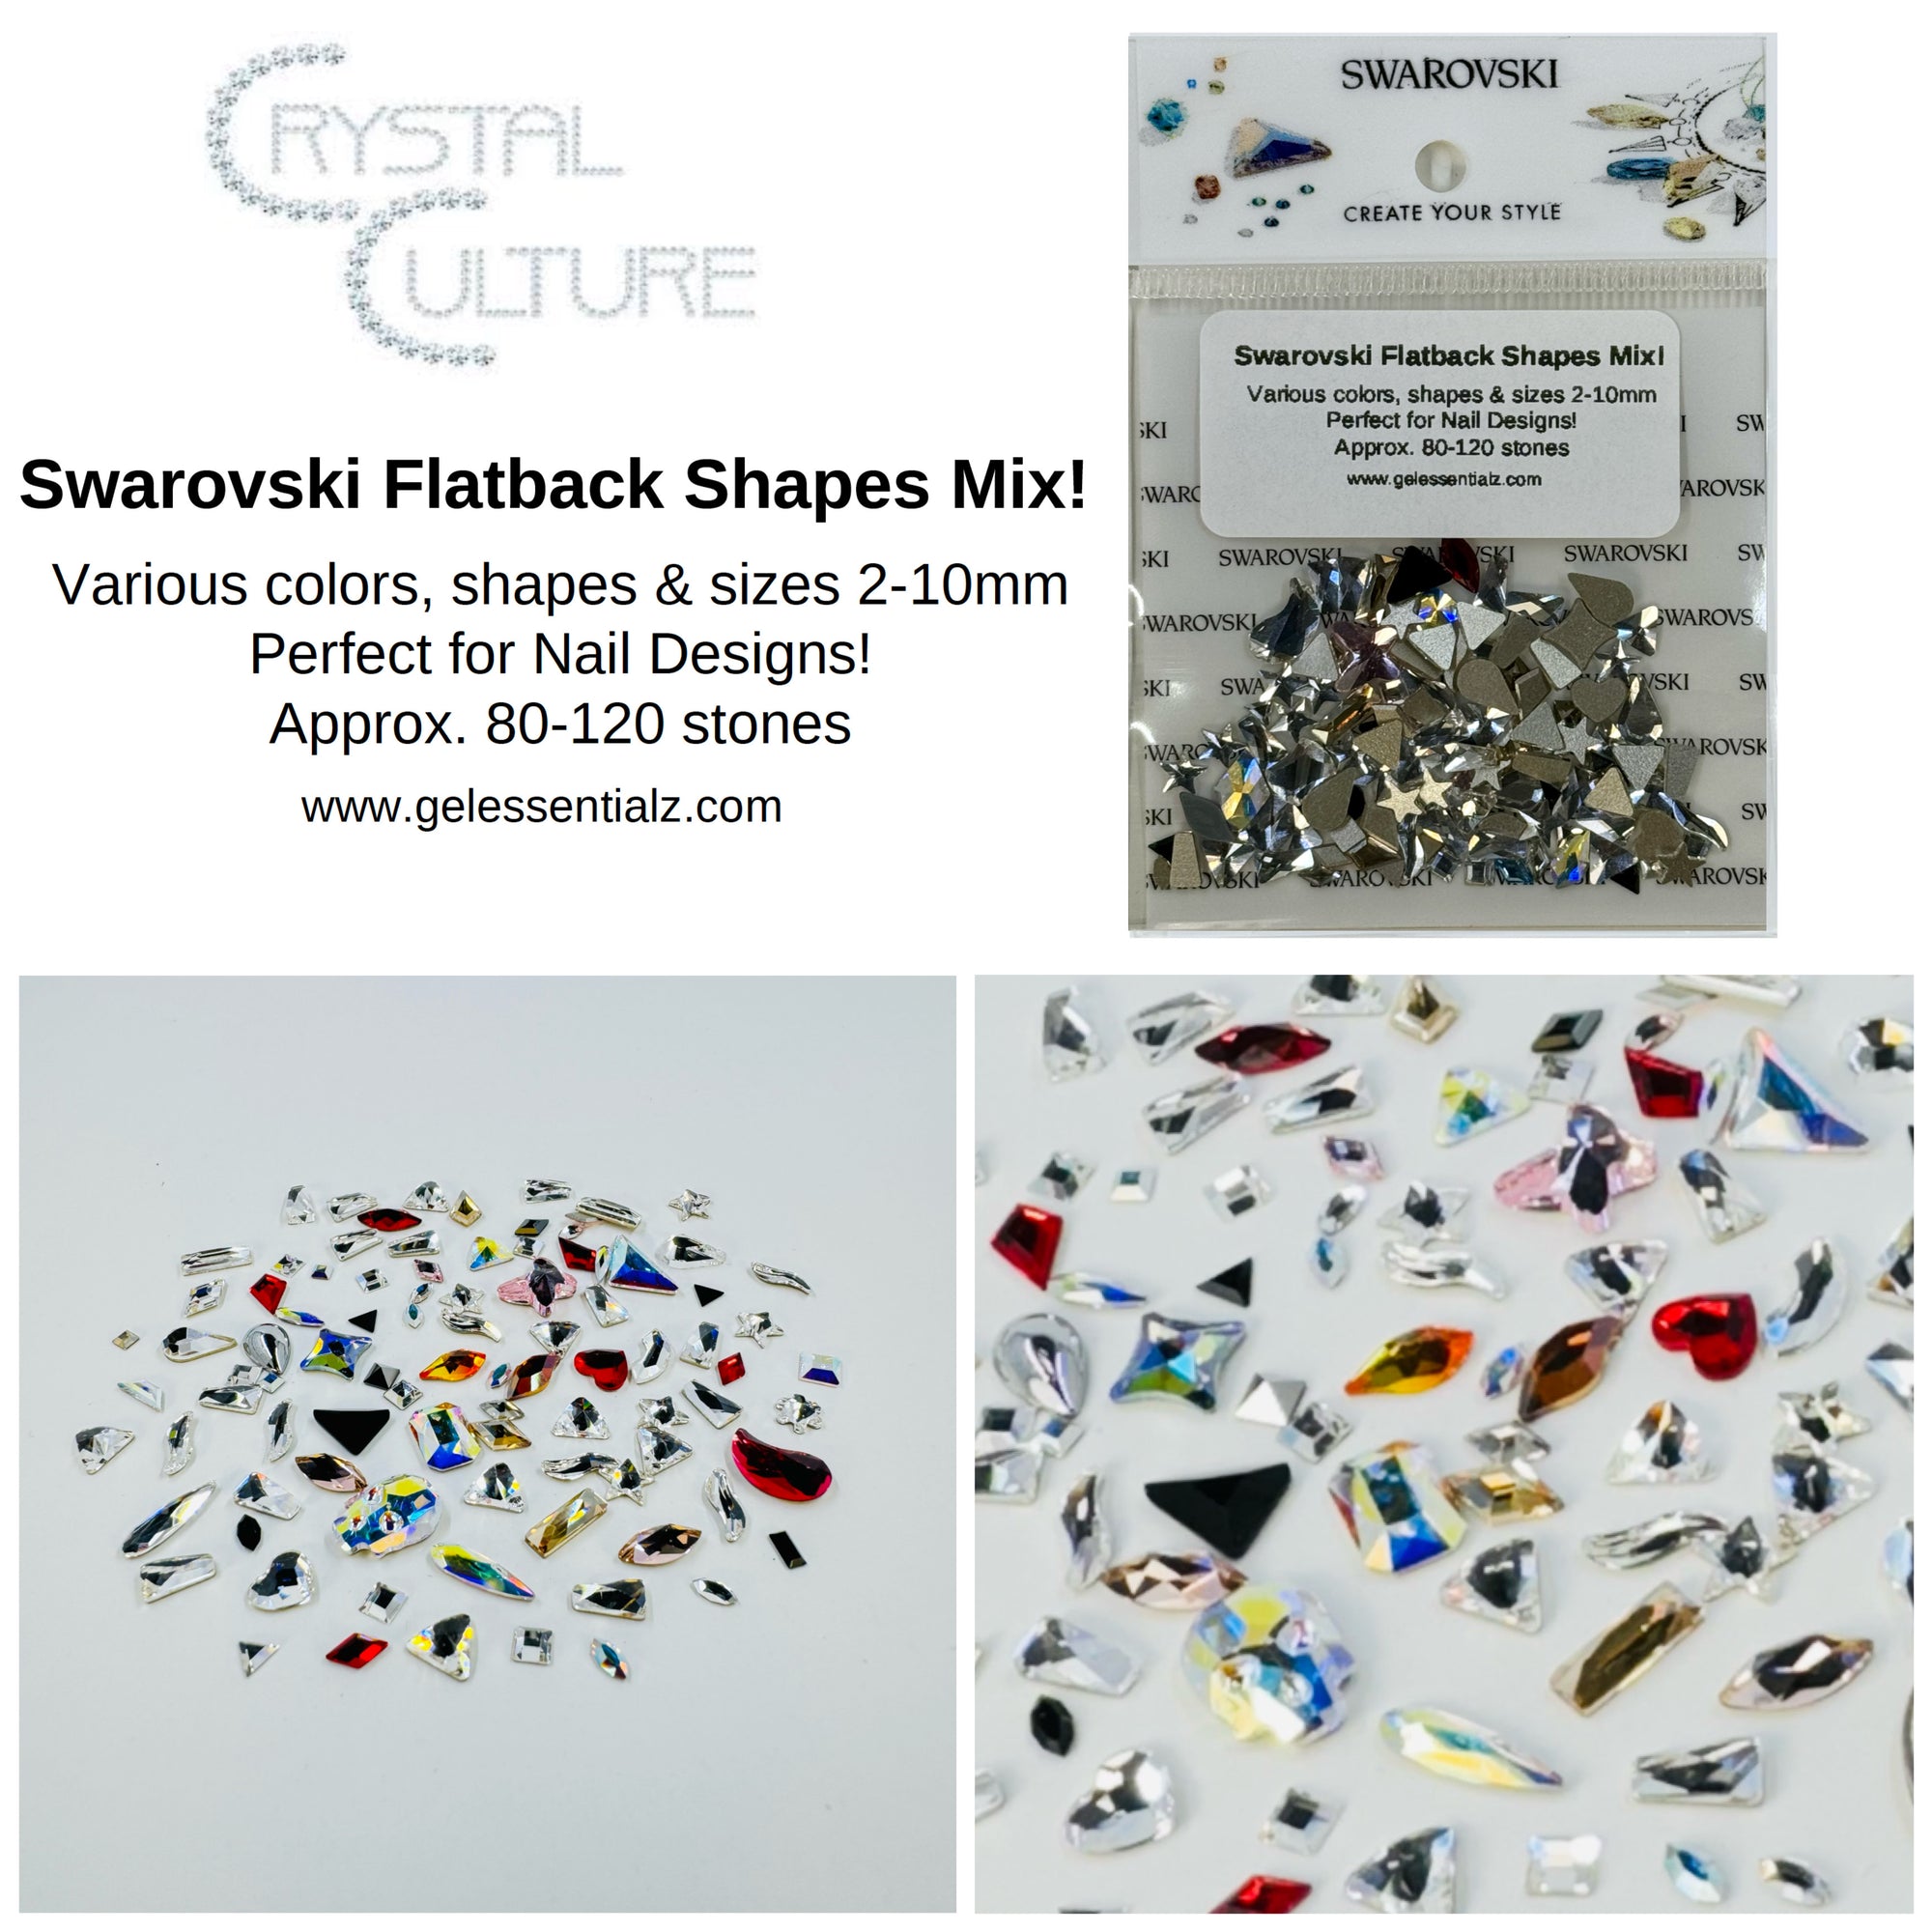 Swarovski Flatback Shapes Mix! 5